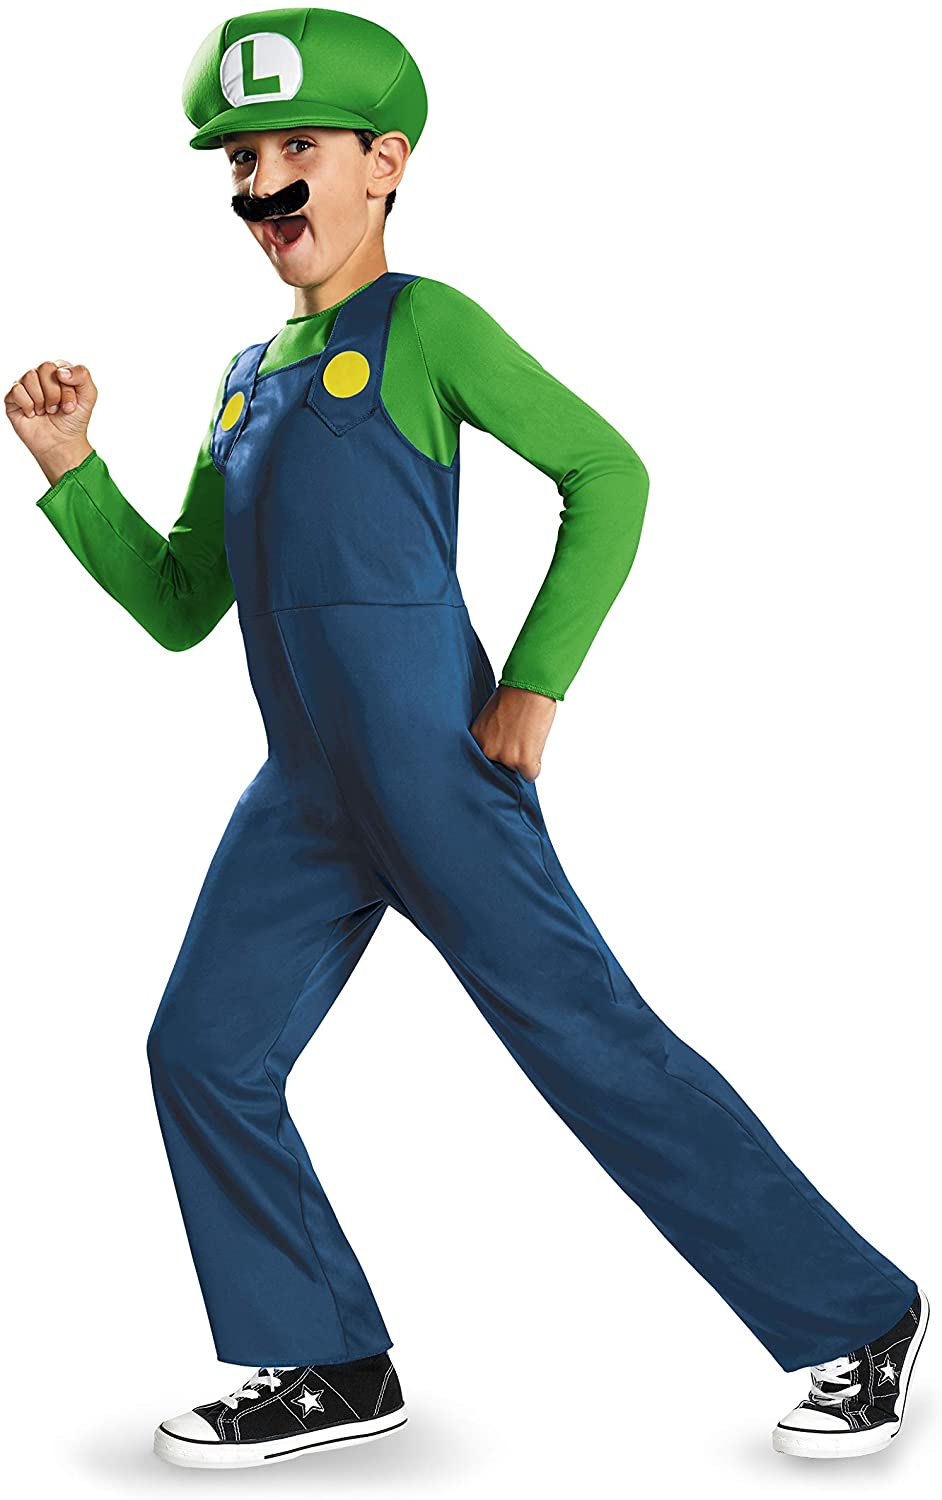 Nintendo Super Mario Brothers Luigi Classic Boys Costume, Small/4-6